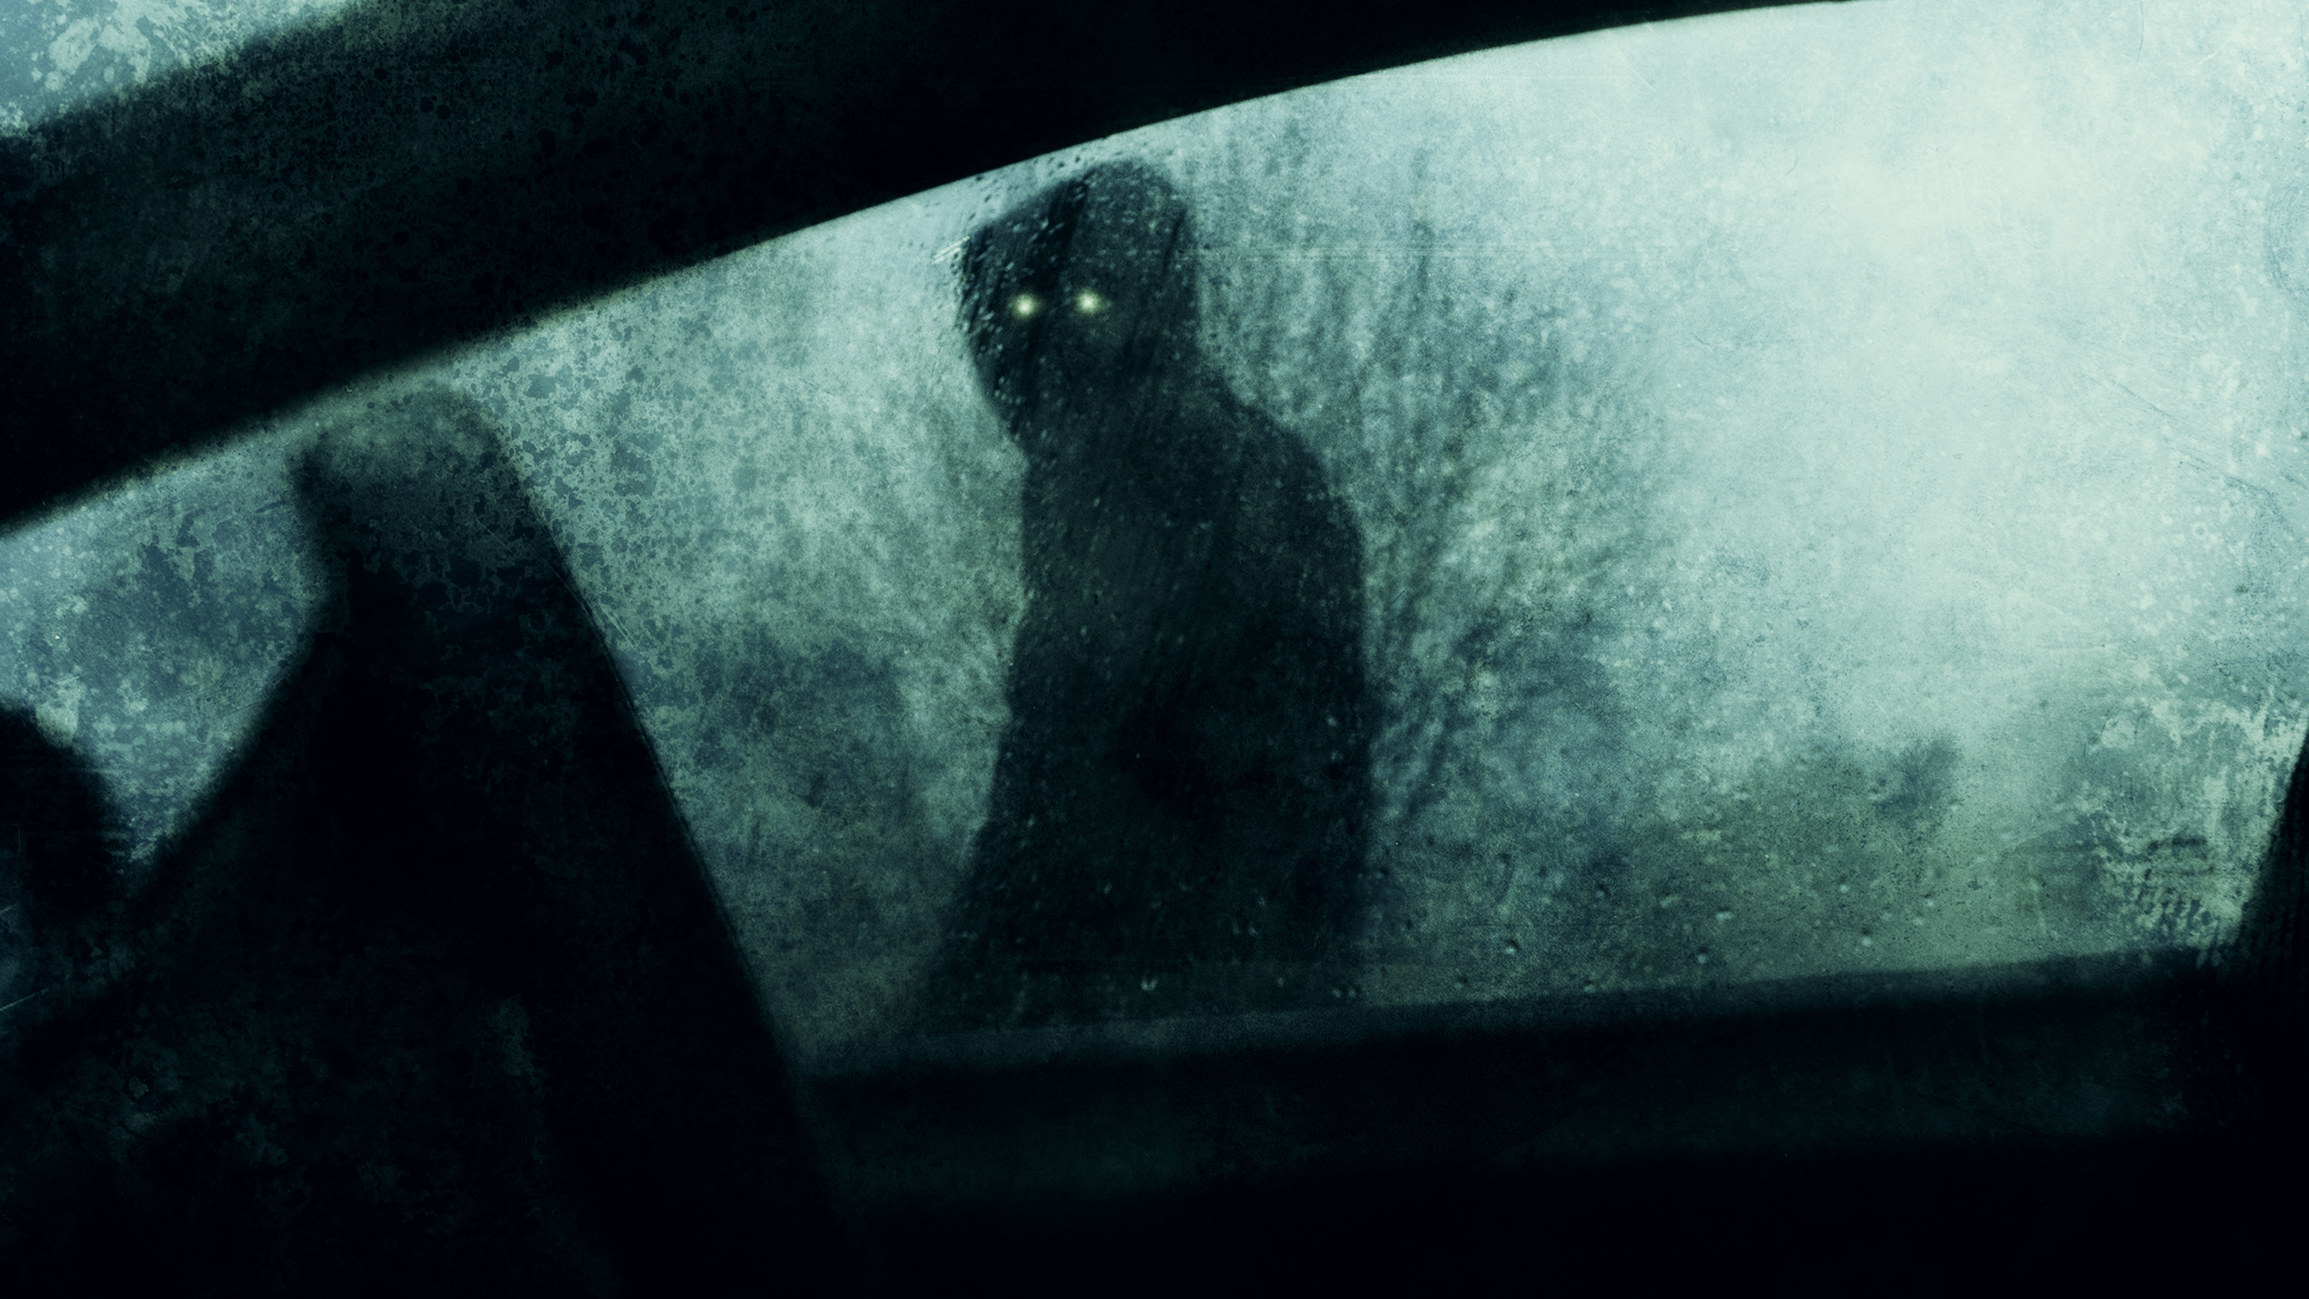 A dark figure outside of a car